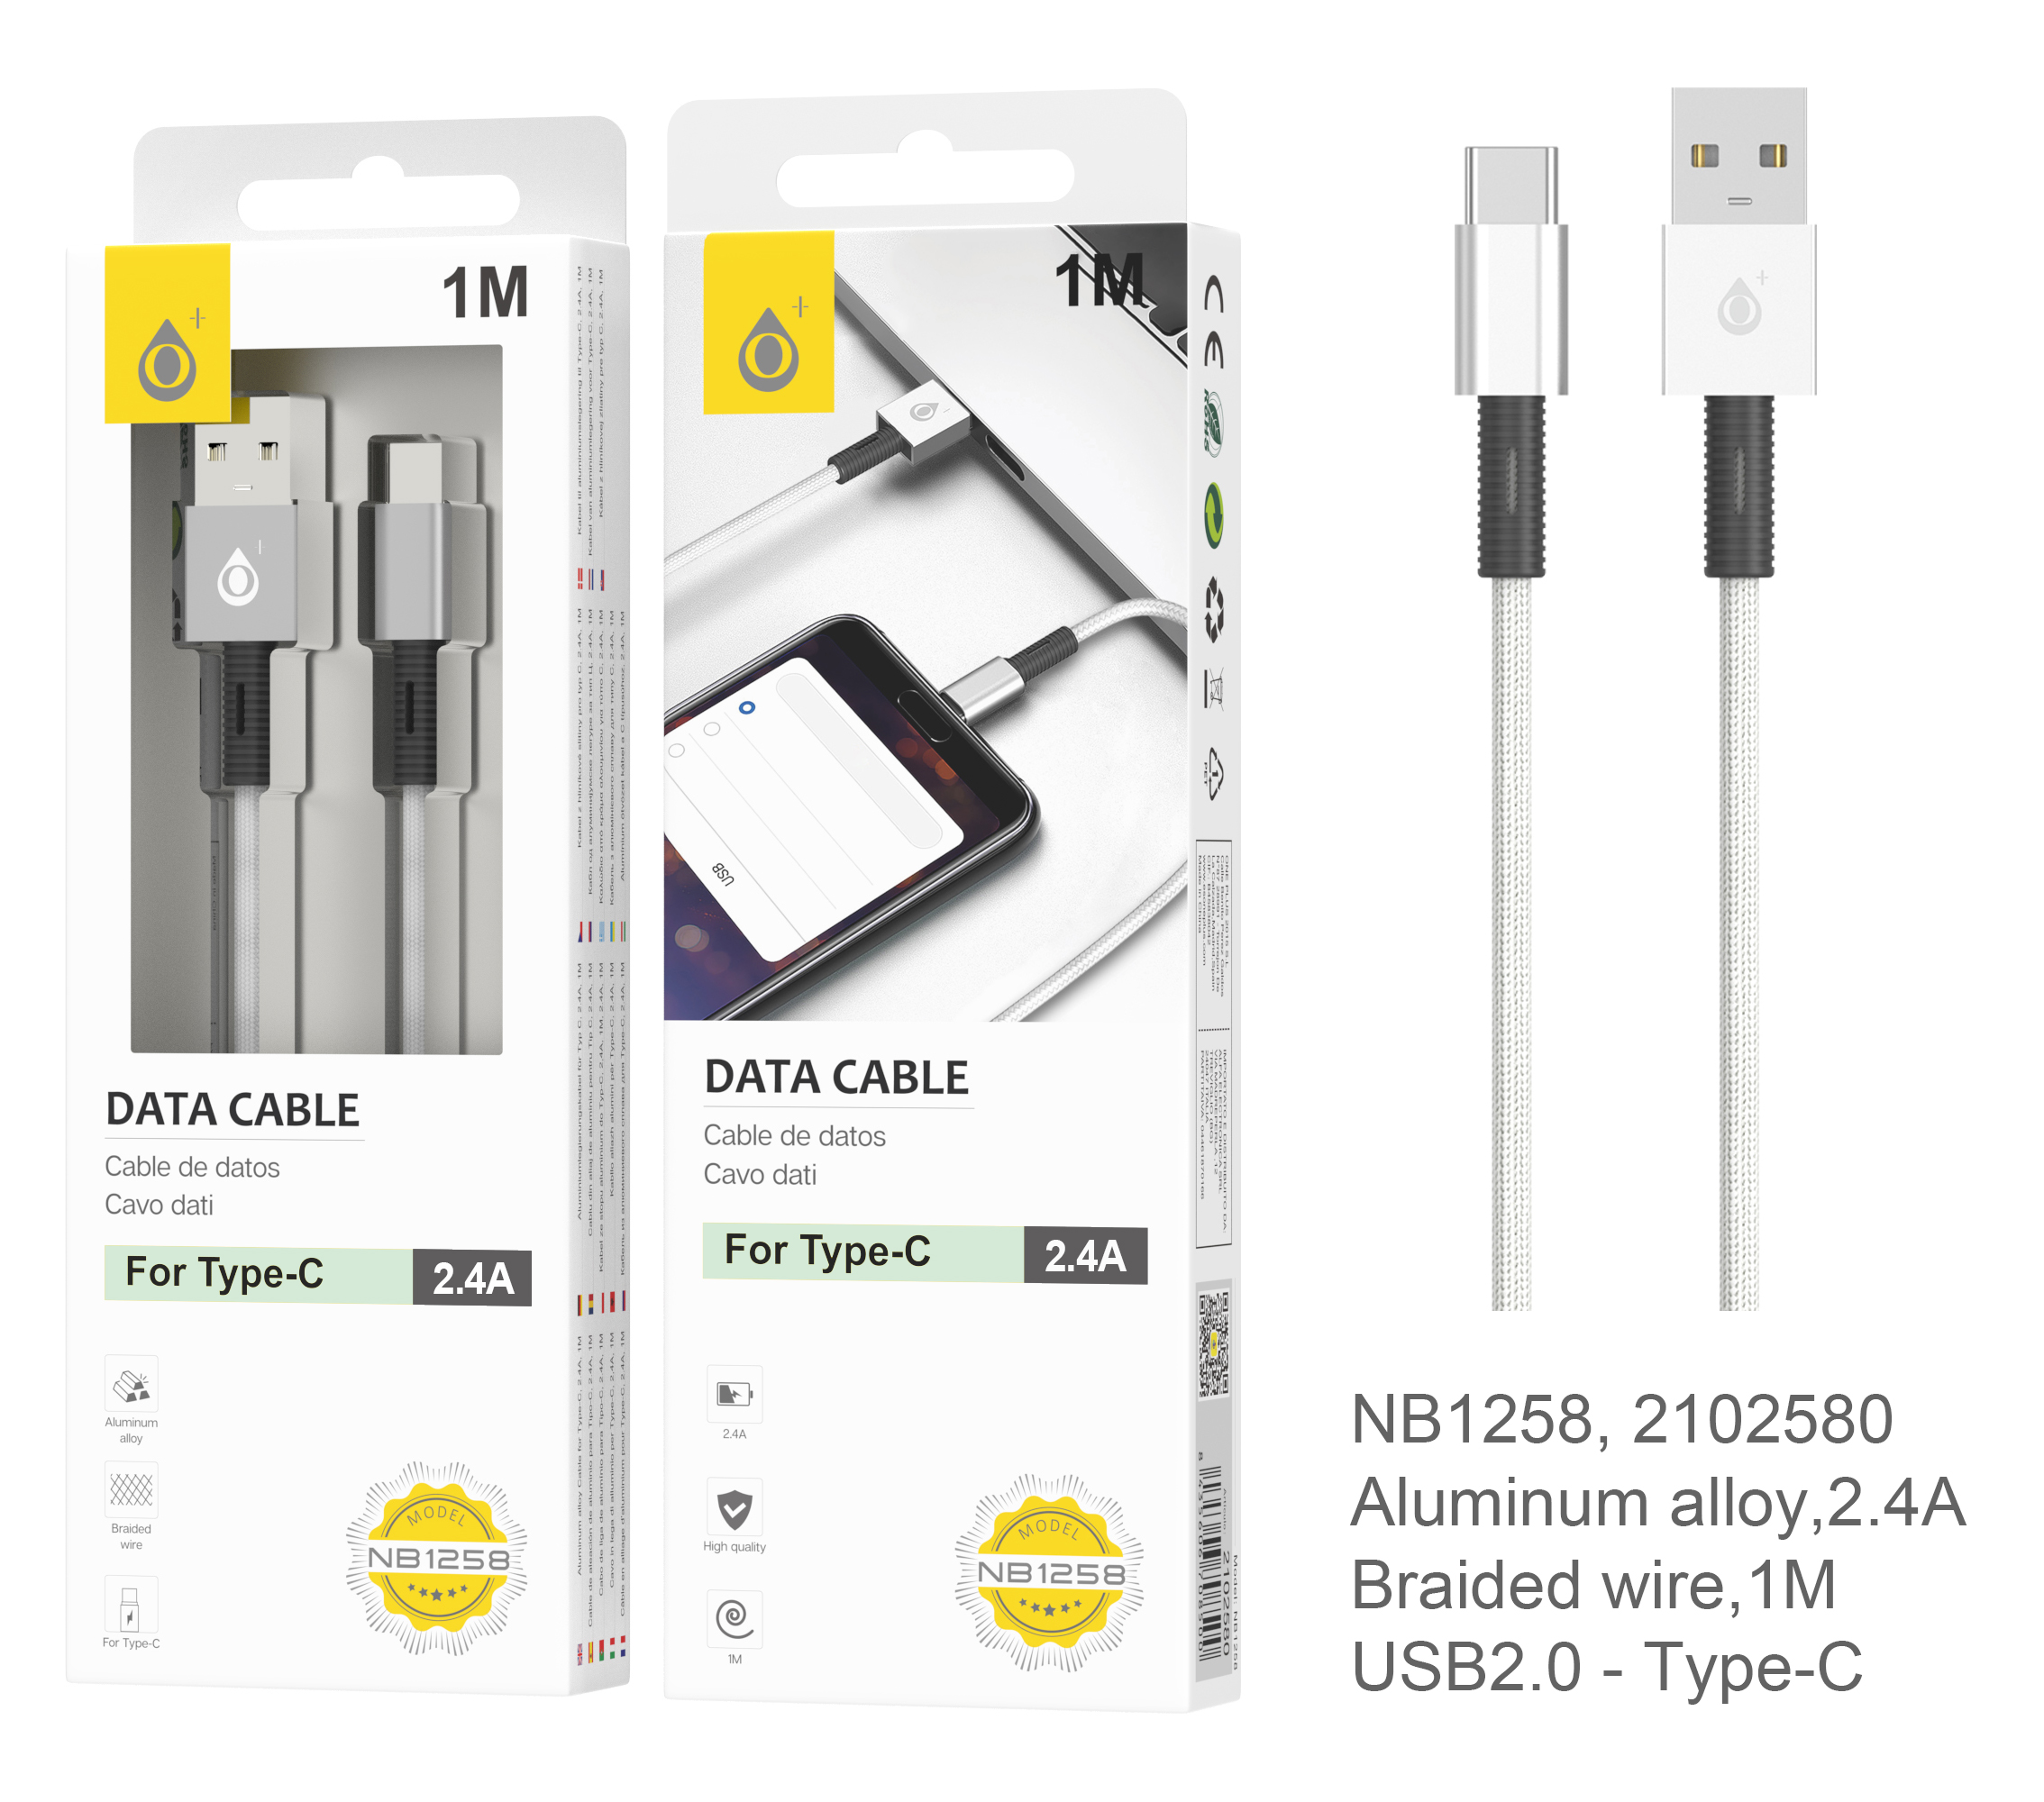 NB1258 PL Cable de Datos trenzado Thor para Type C, 1M 2.4A, Plata